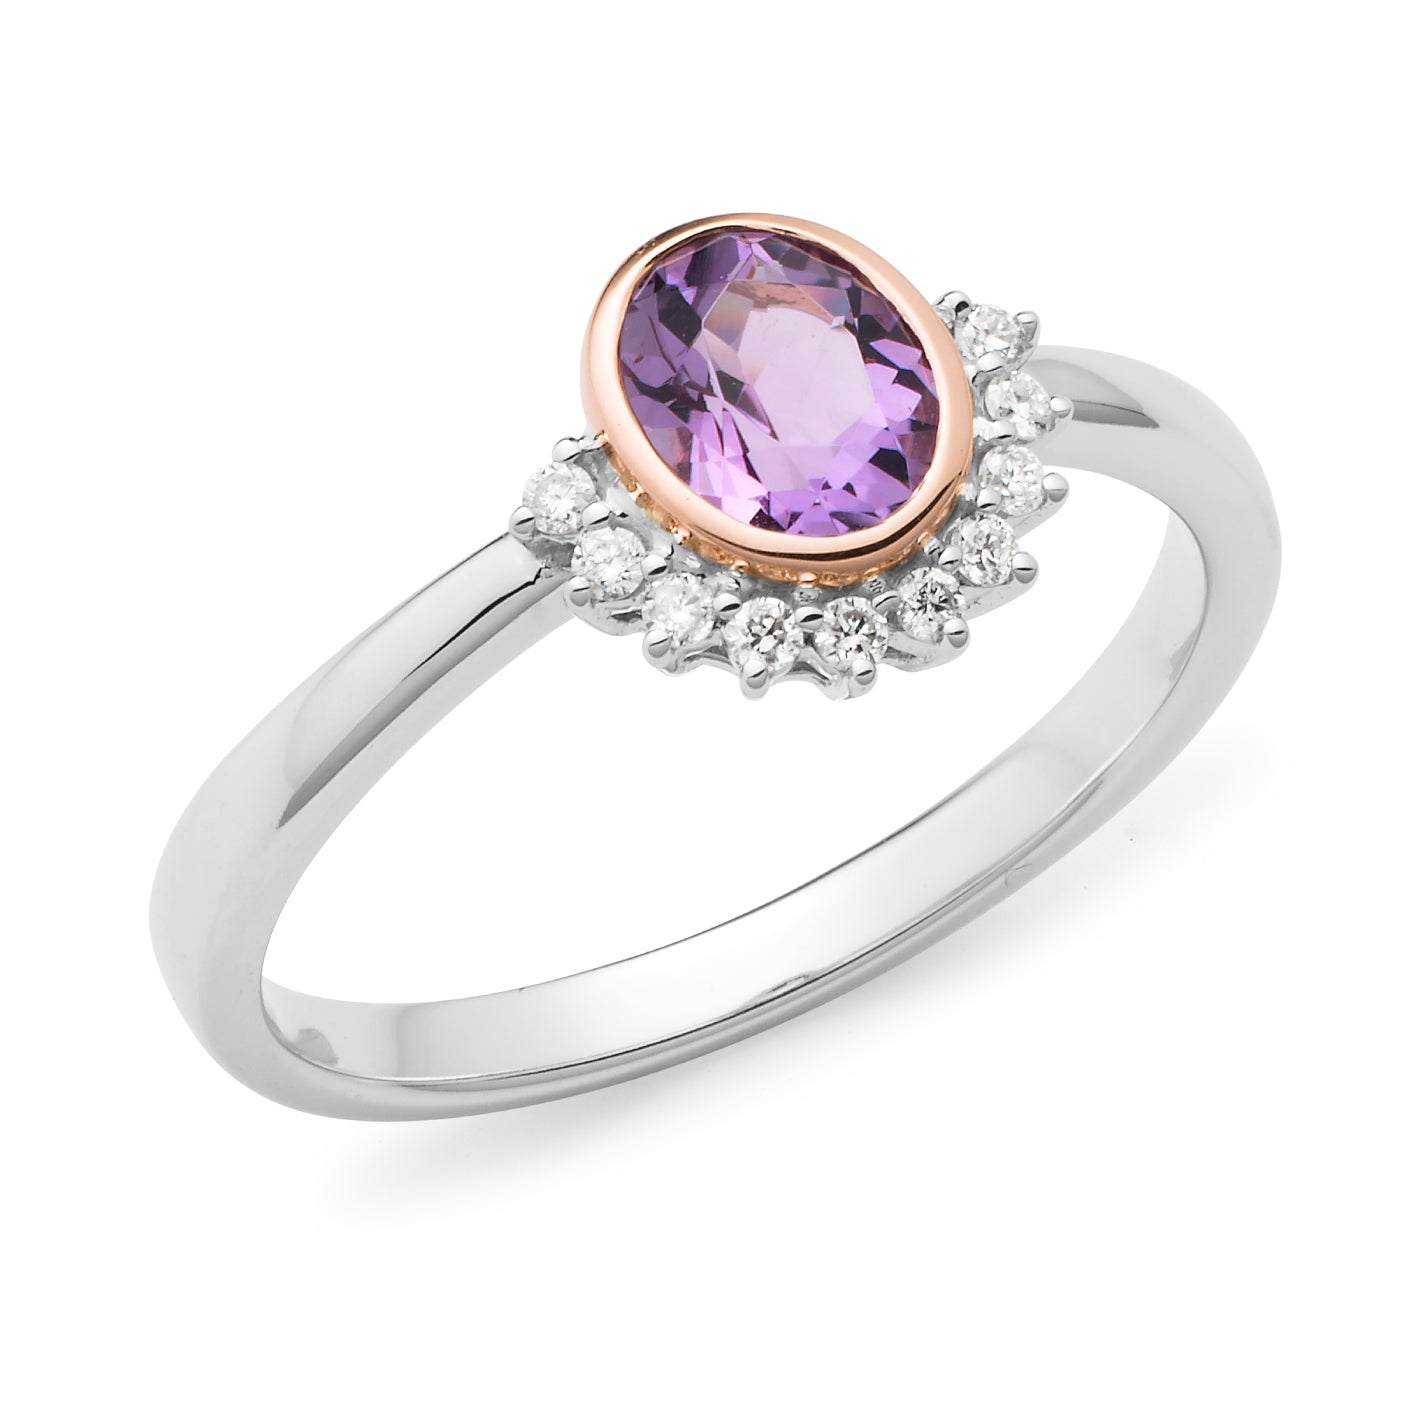 Pink Amethyst & Diamond Bezel/Claw Dress Ring in 9 Carat White & Rose Gold